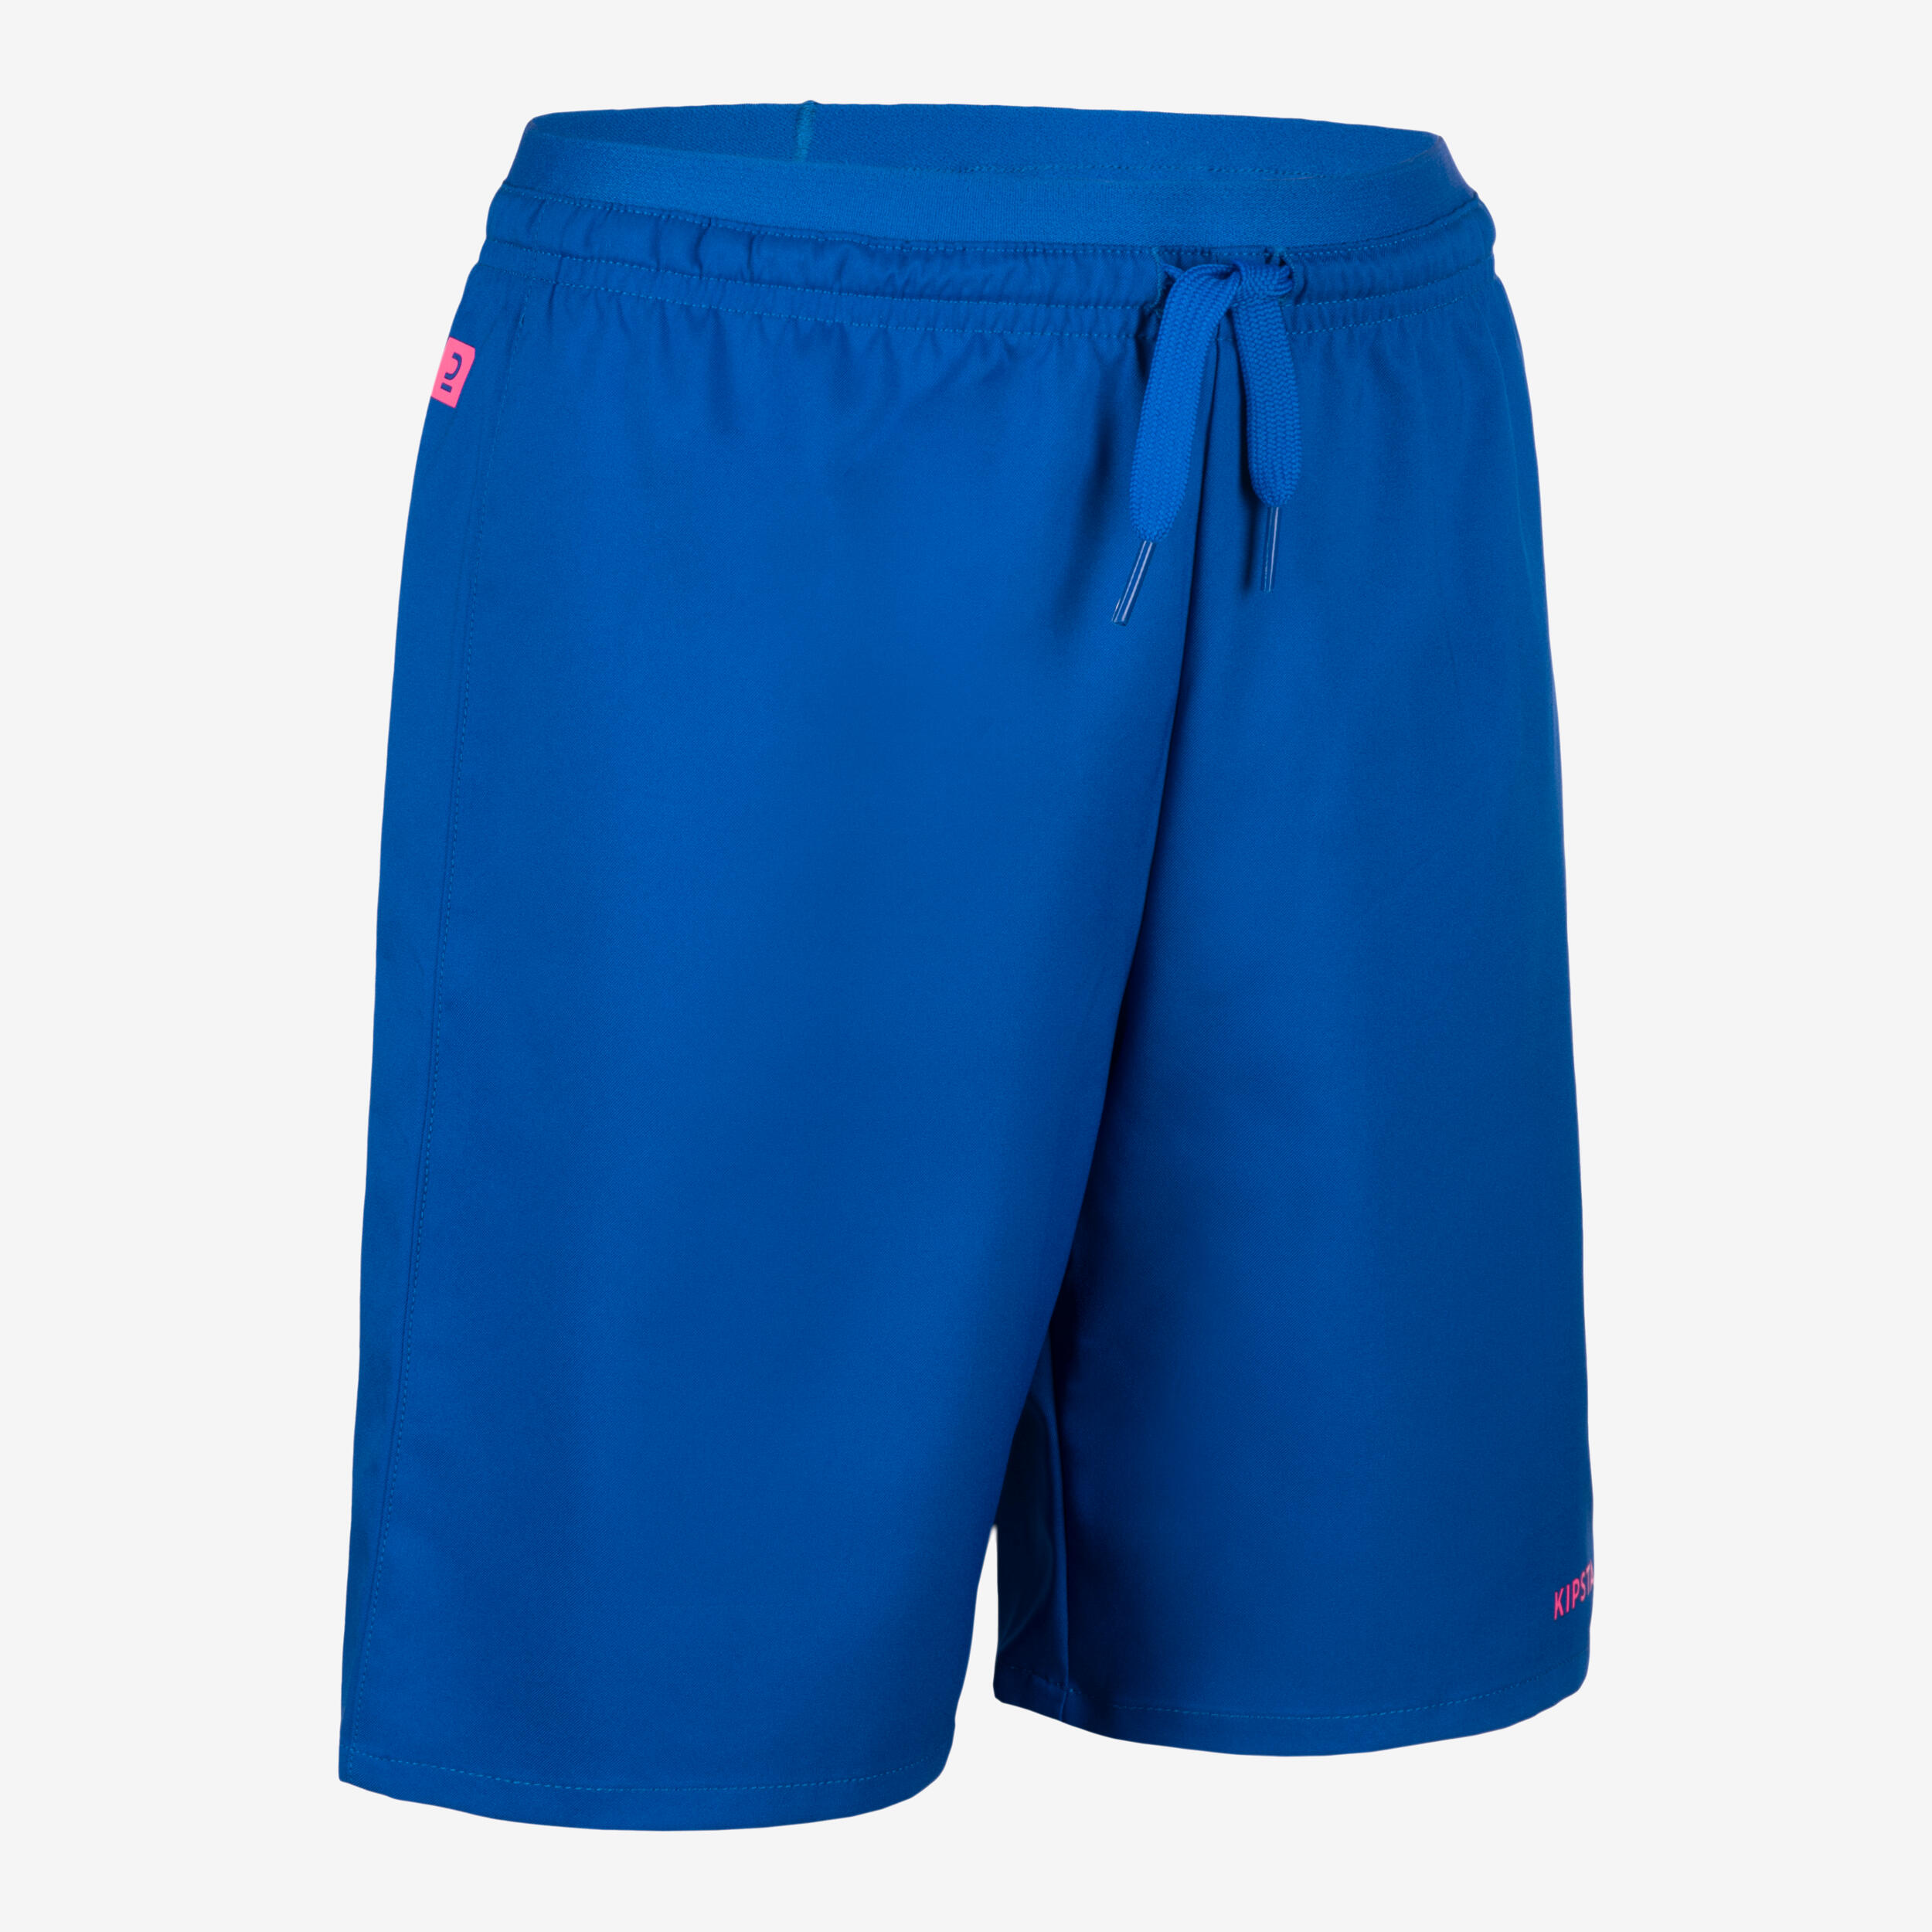 Kids' Football Shorts - Aqua Blue/Pink 4/5